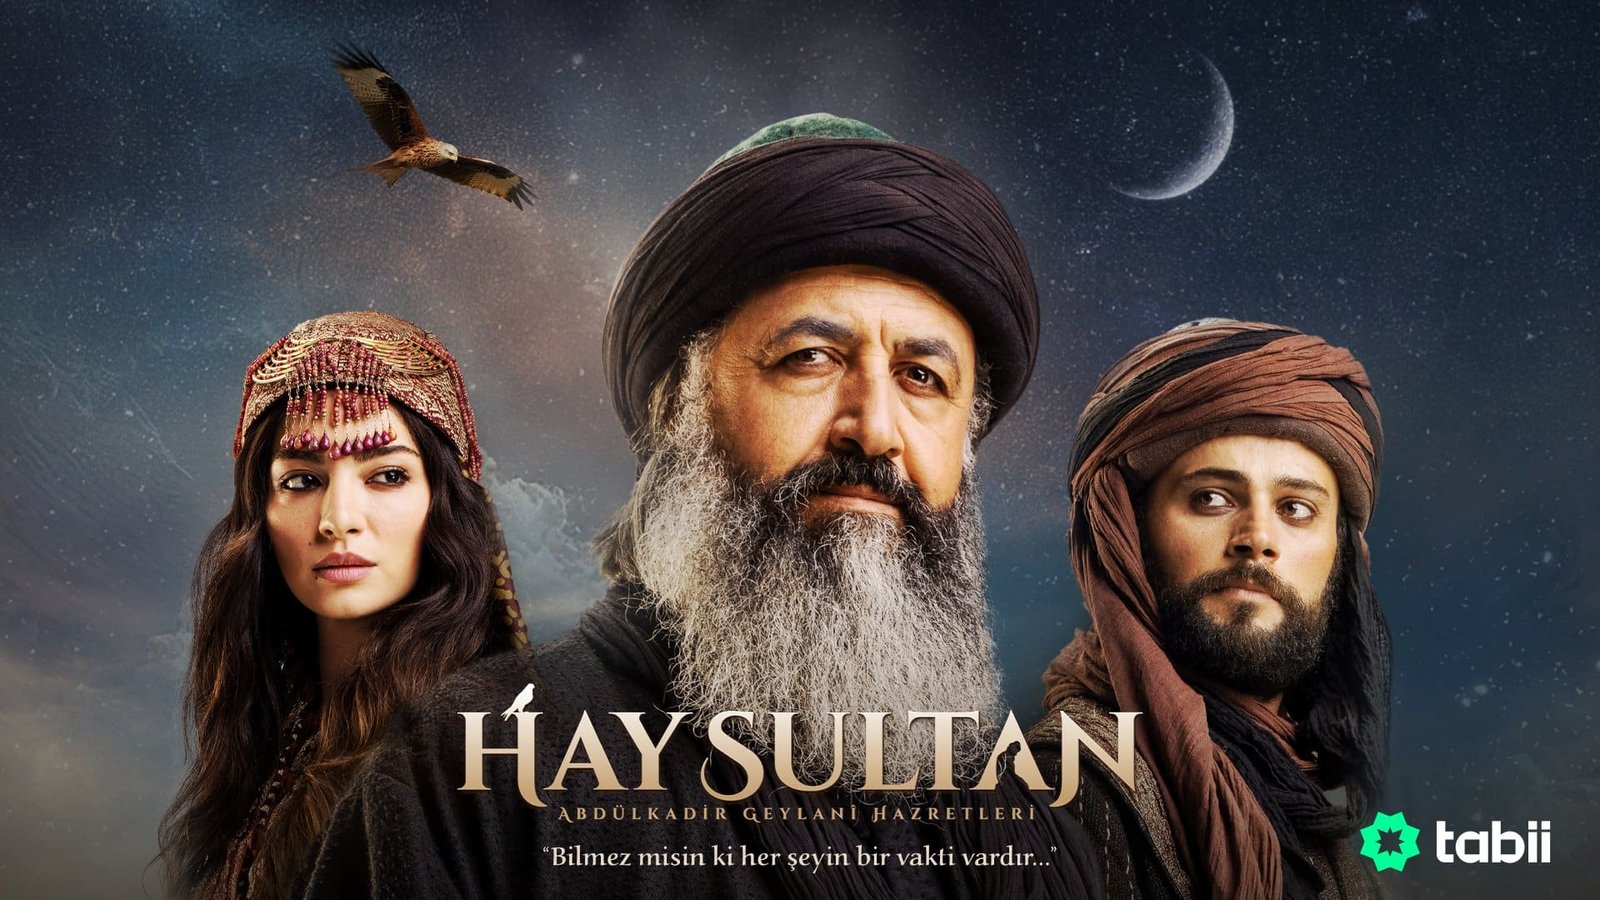 Hay Sultan Abdulkadir Geylani Episode 10 English Subtitles